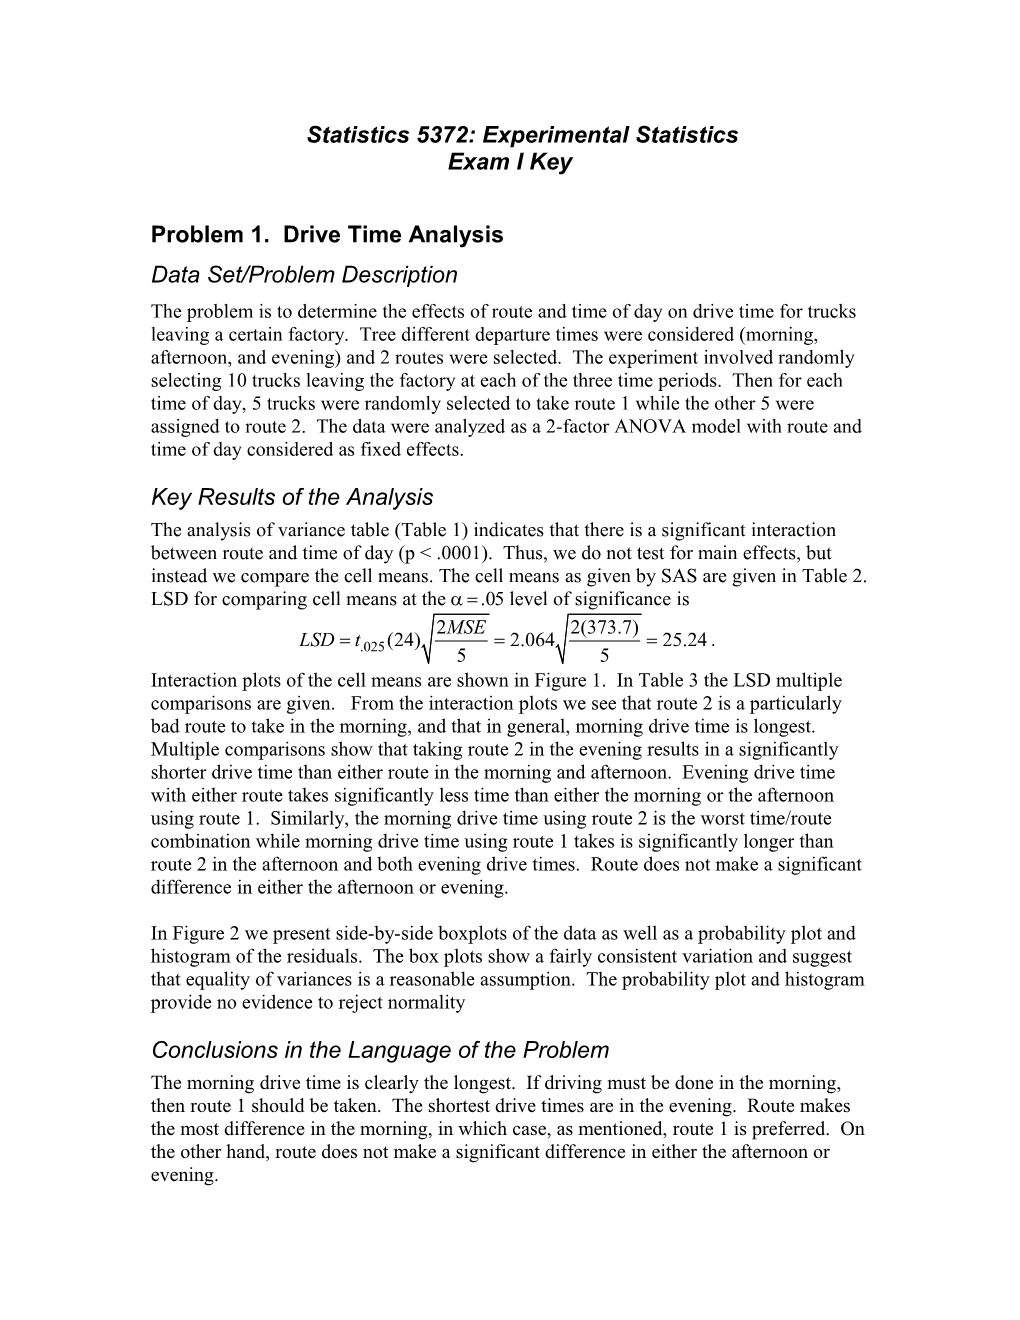 Problem 1. Drive Time Analysis